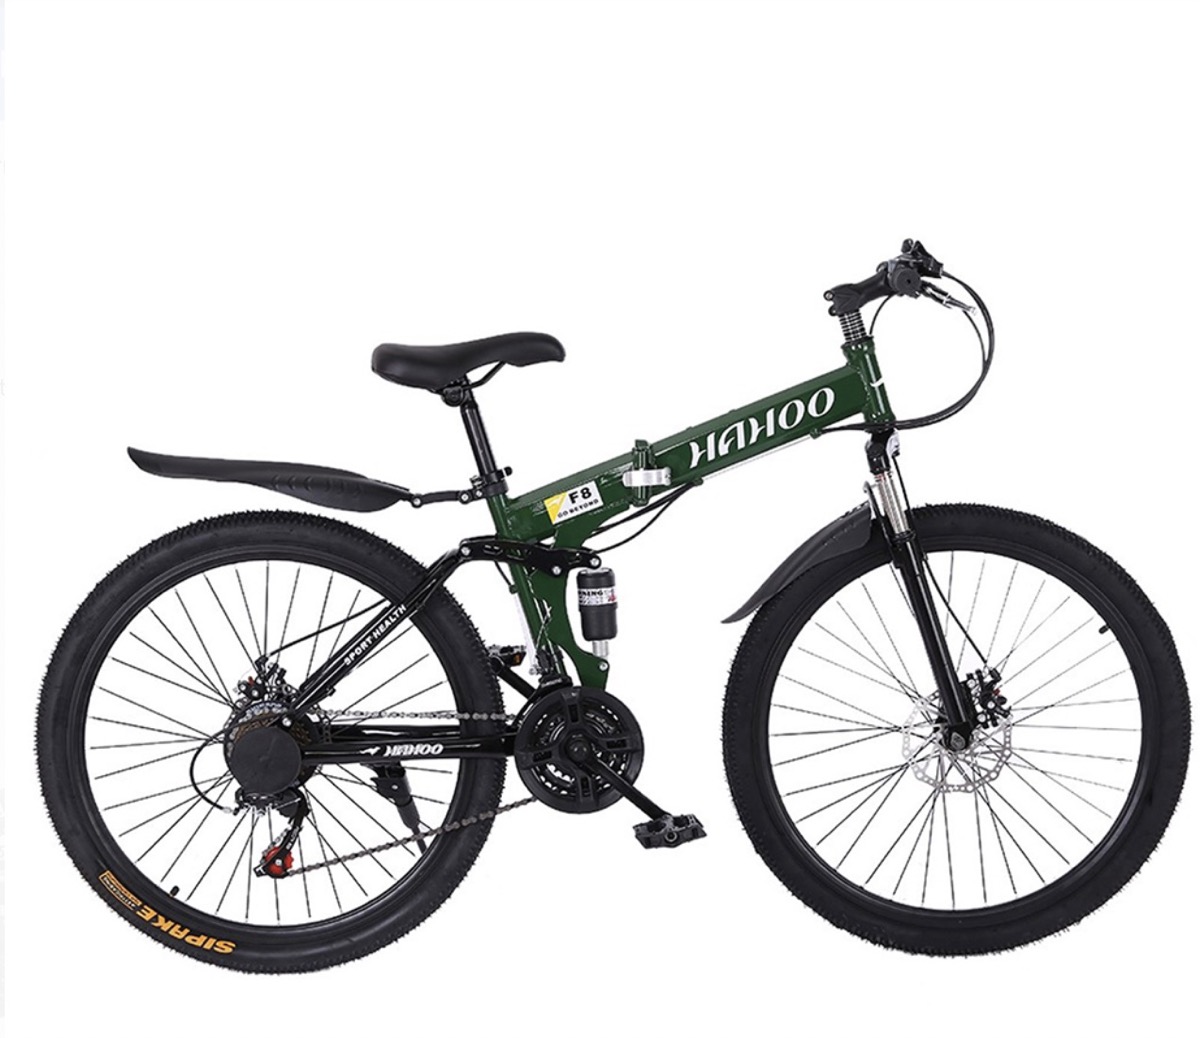 green mountain bike